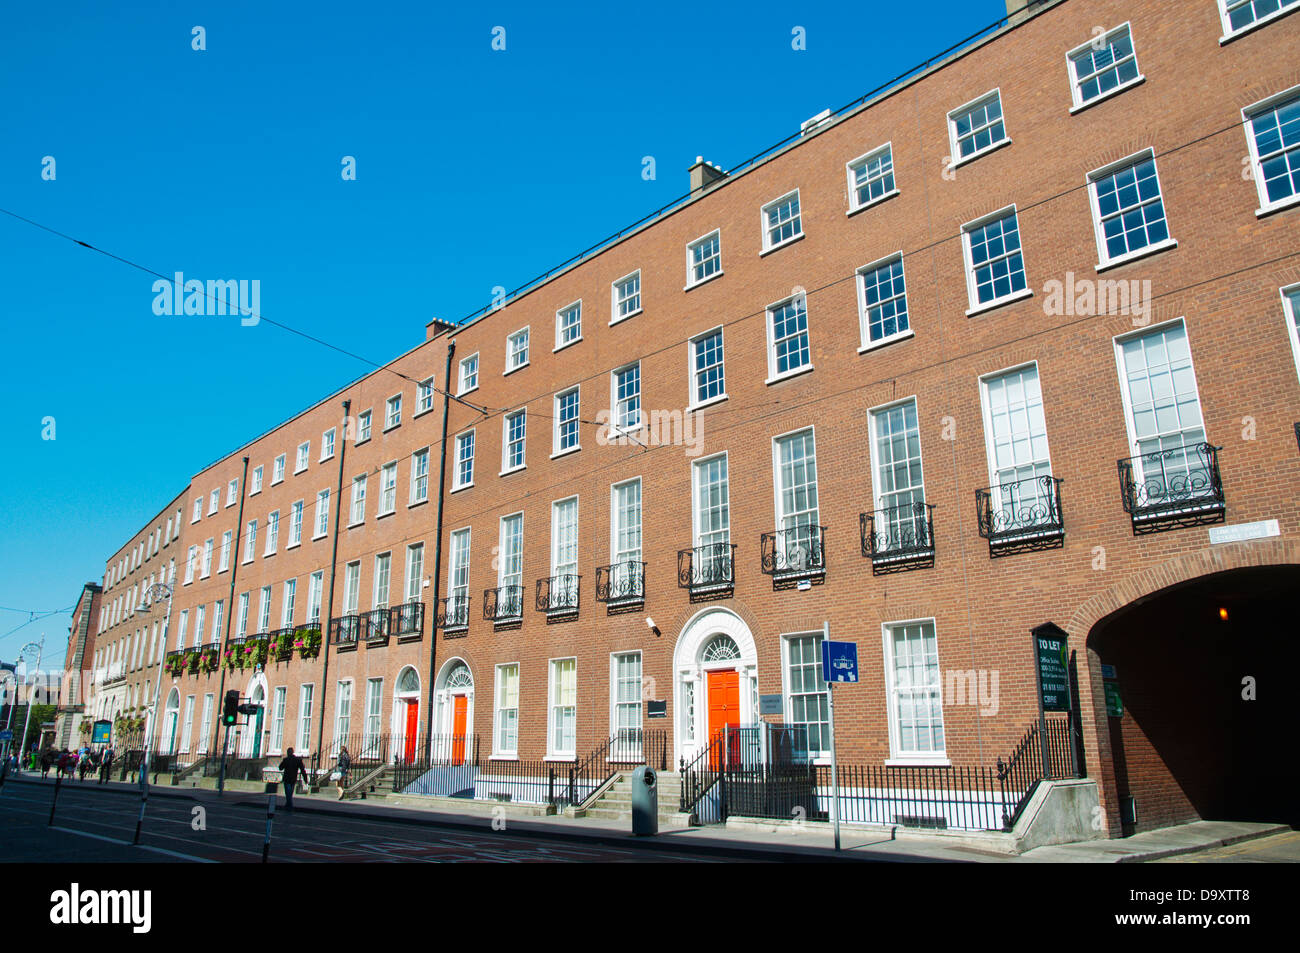 Georgianische Architektur entlang Harcourt Street Dublin Irland Mitteleuropa Stockfoto